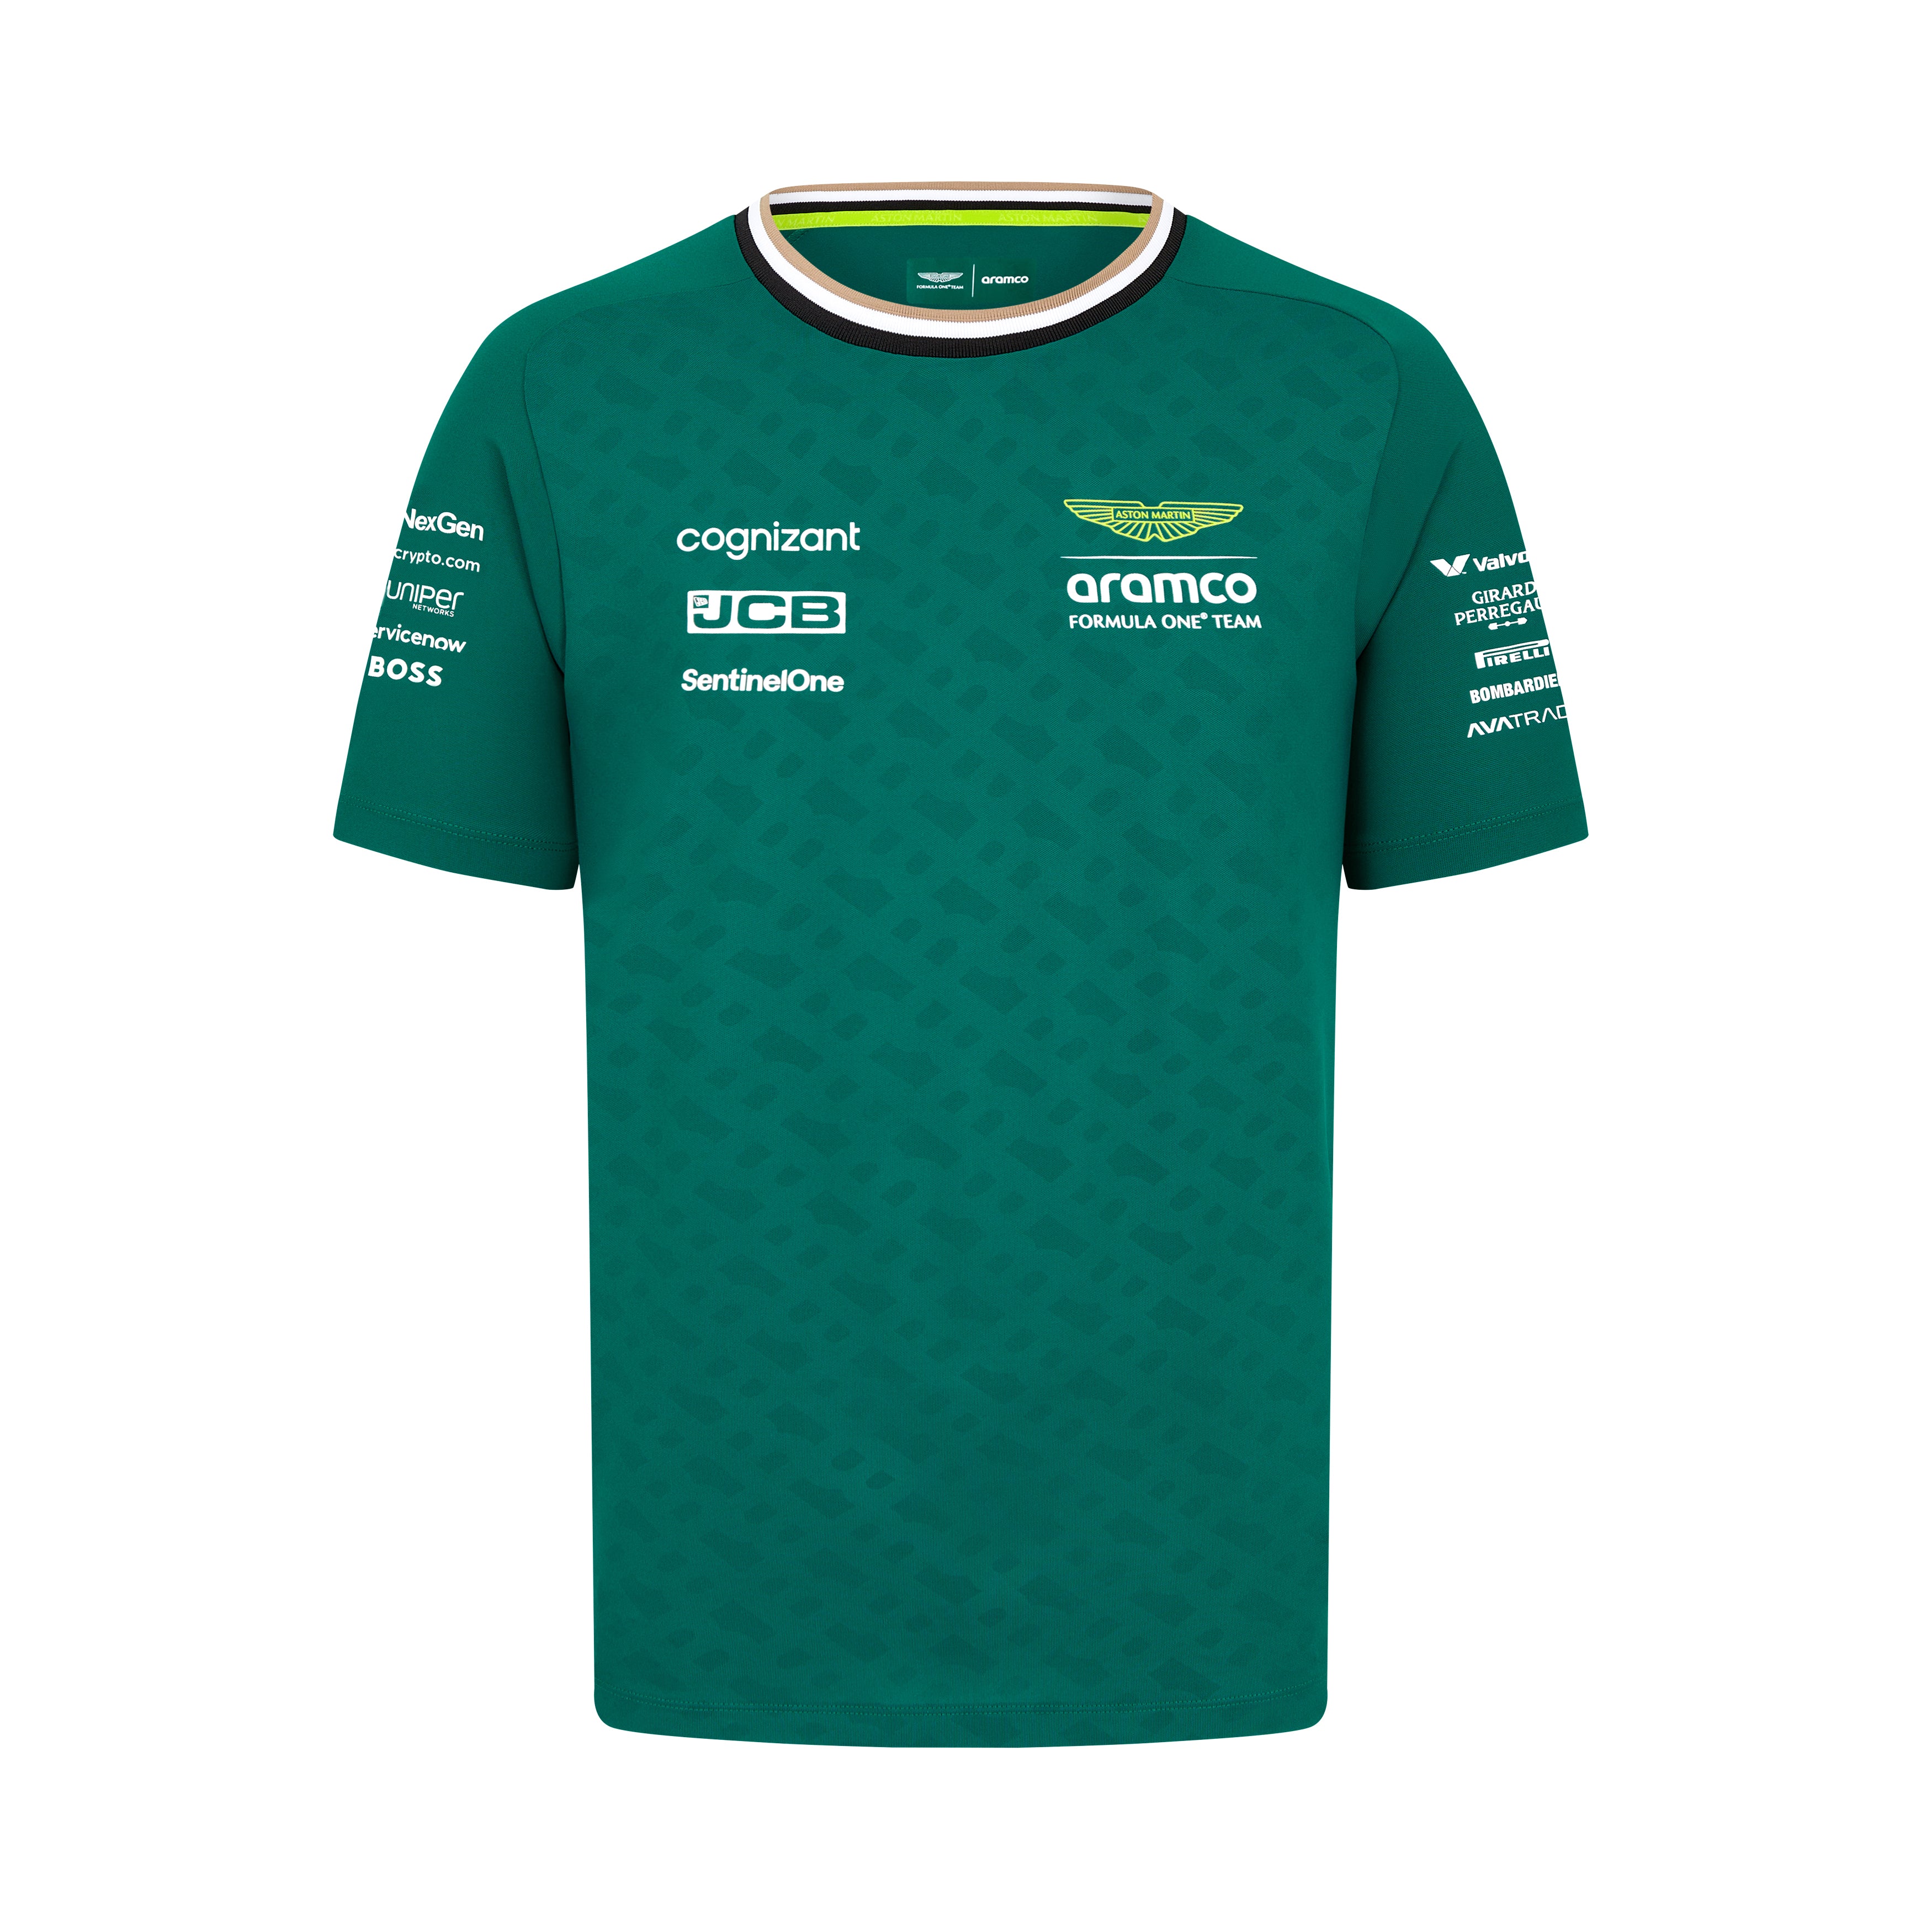 Aston Martin F1 Kid's 2024 Fernando Alonso Team T-Shirt Green